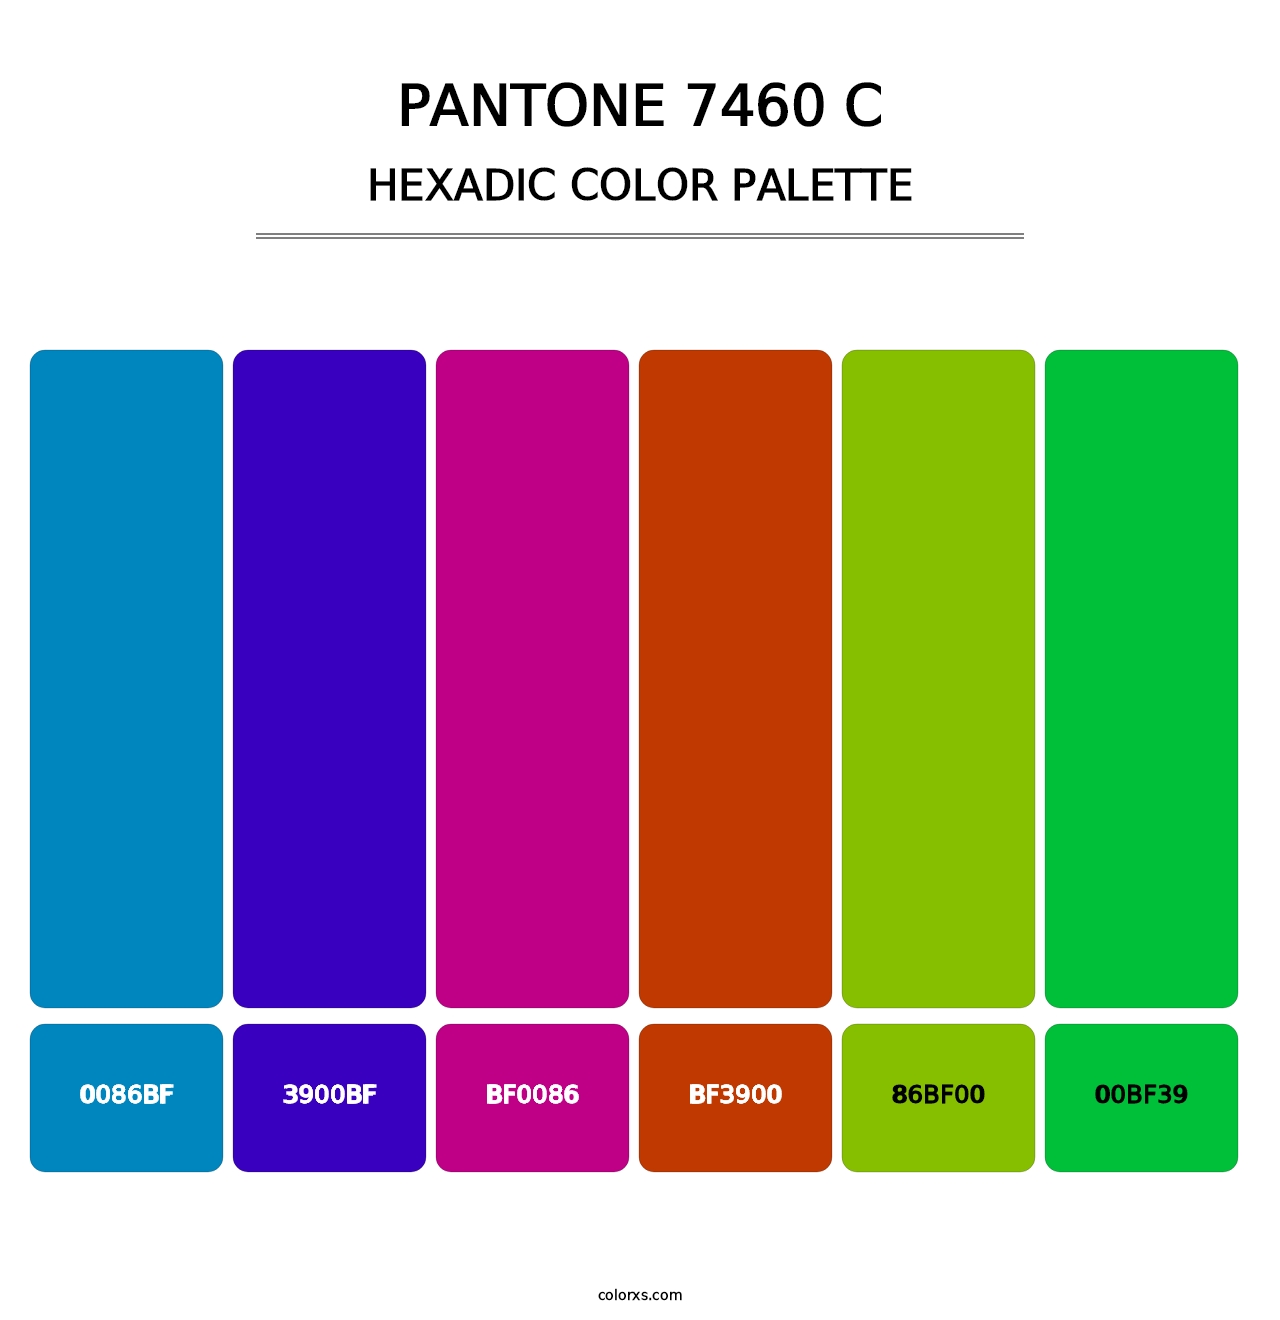 PANTONE 7460 C - Hexadic Color Palette